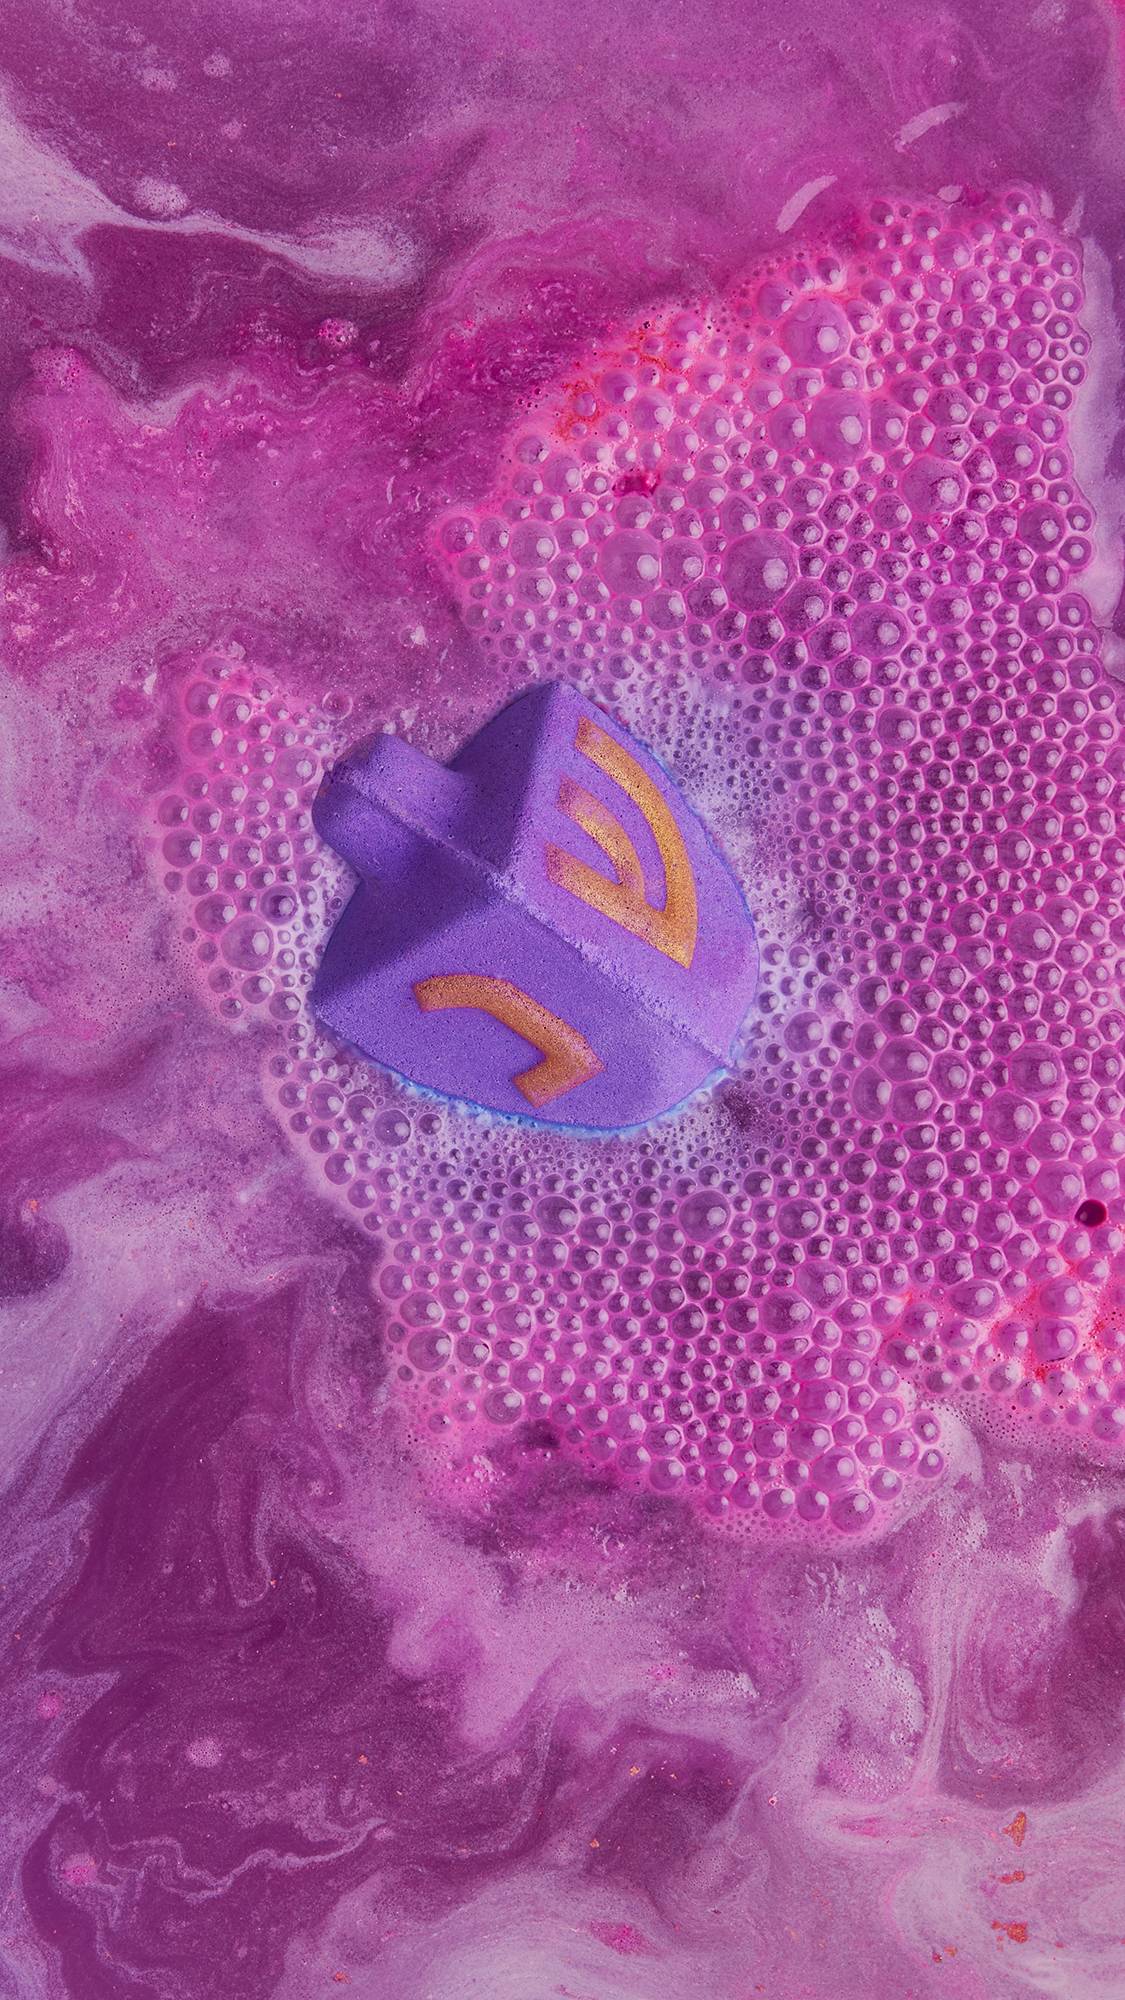 Dreidel, Dreidel, Dreidel bath bomb dissolves into the bath water as it fizzes with vivid pink and purple swirling foam.